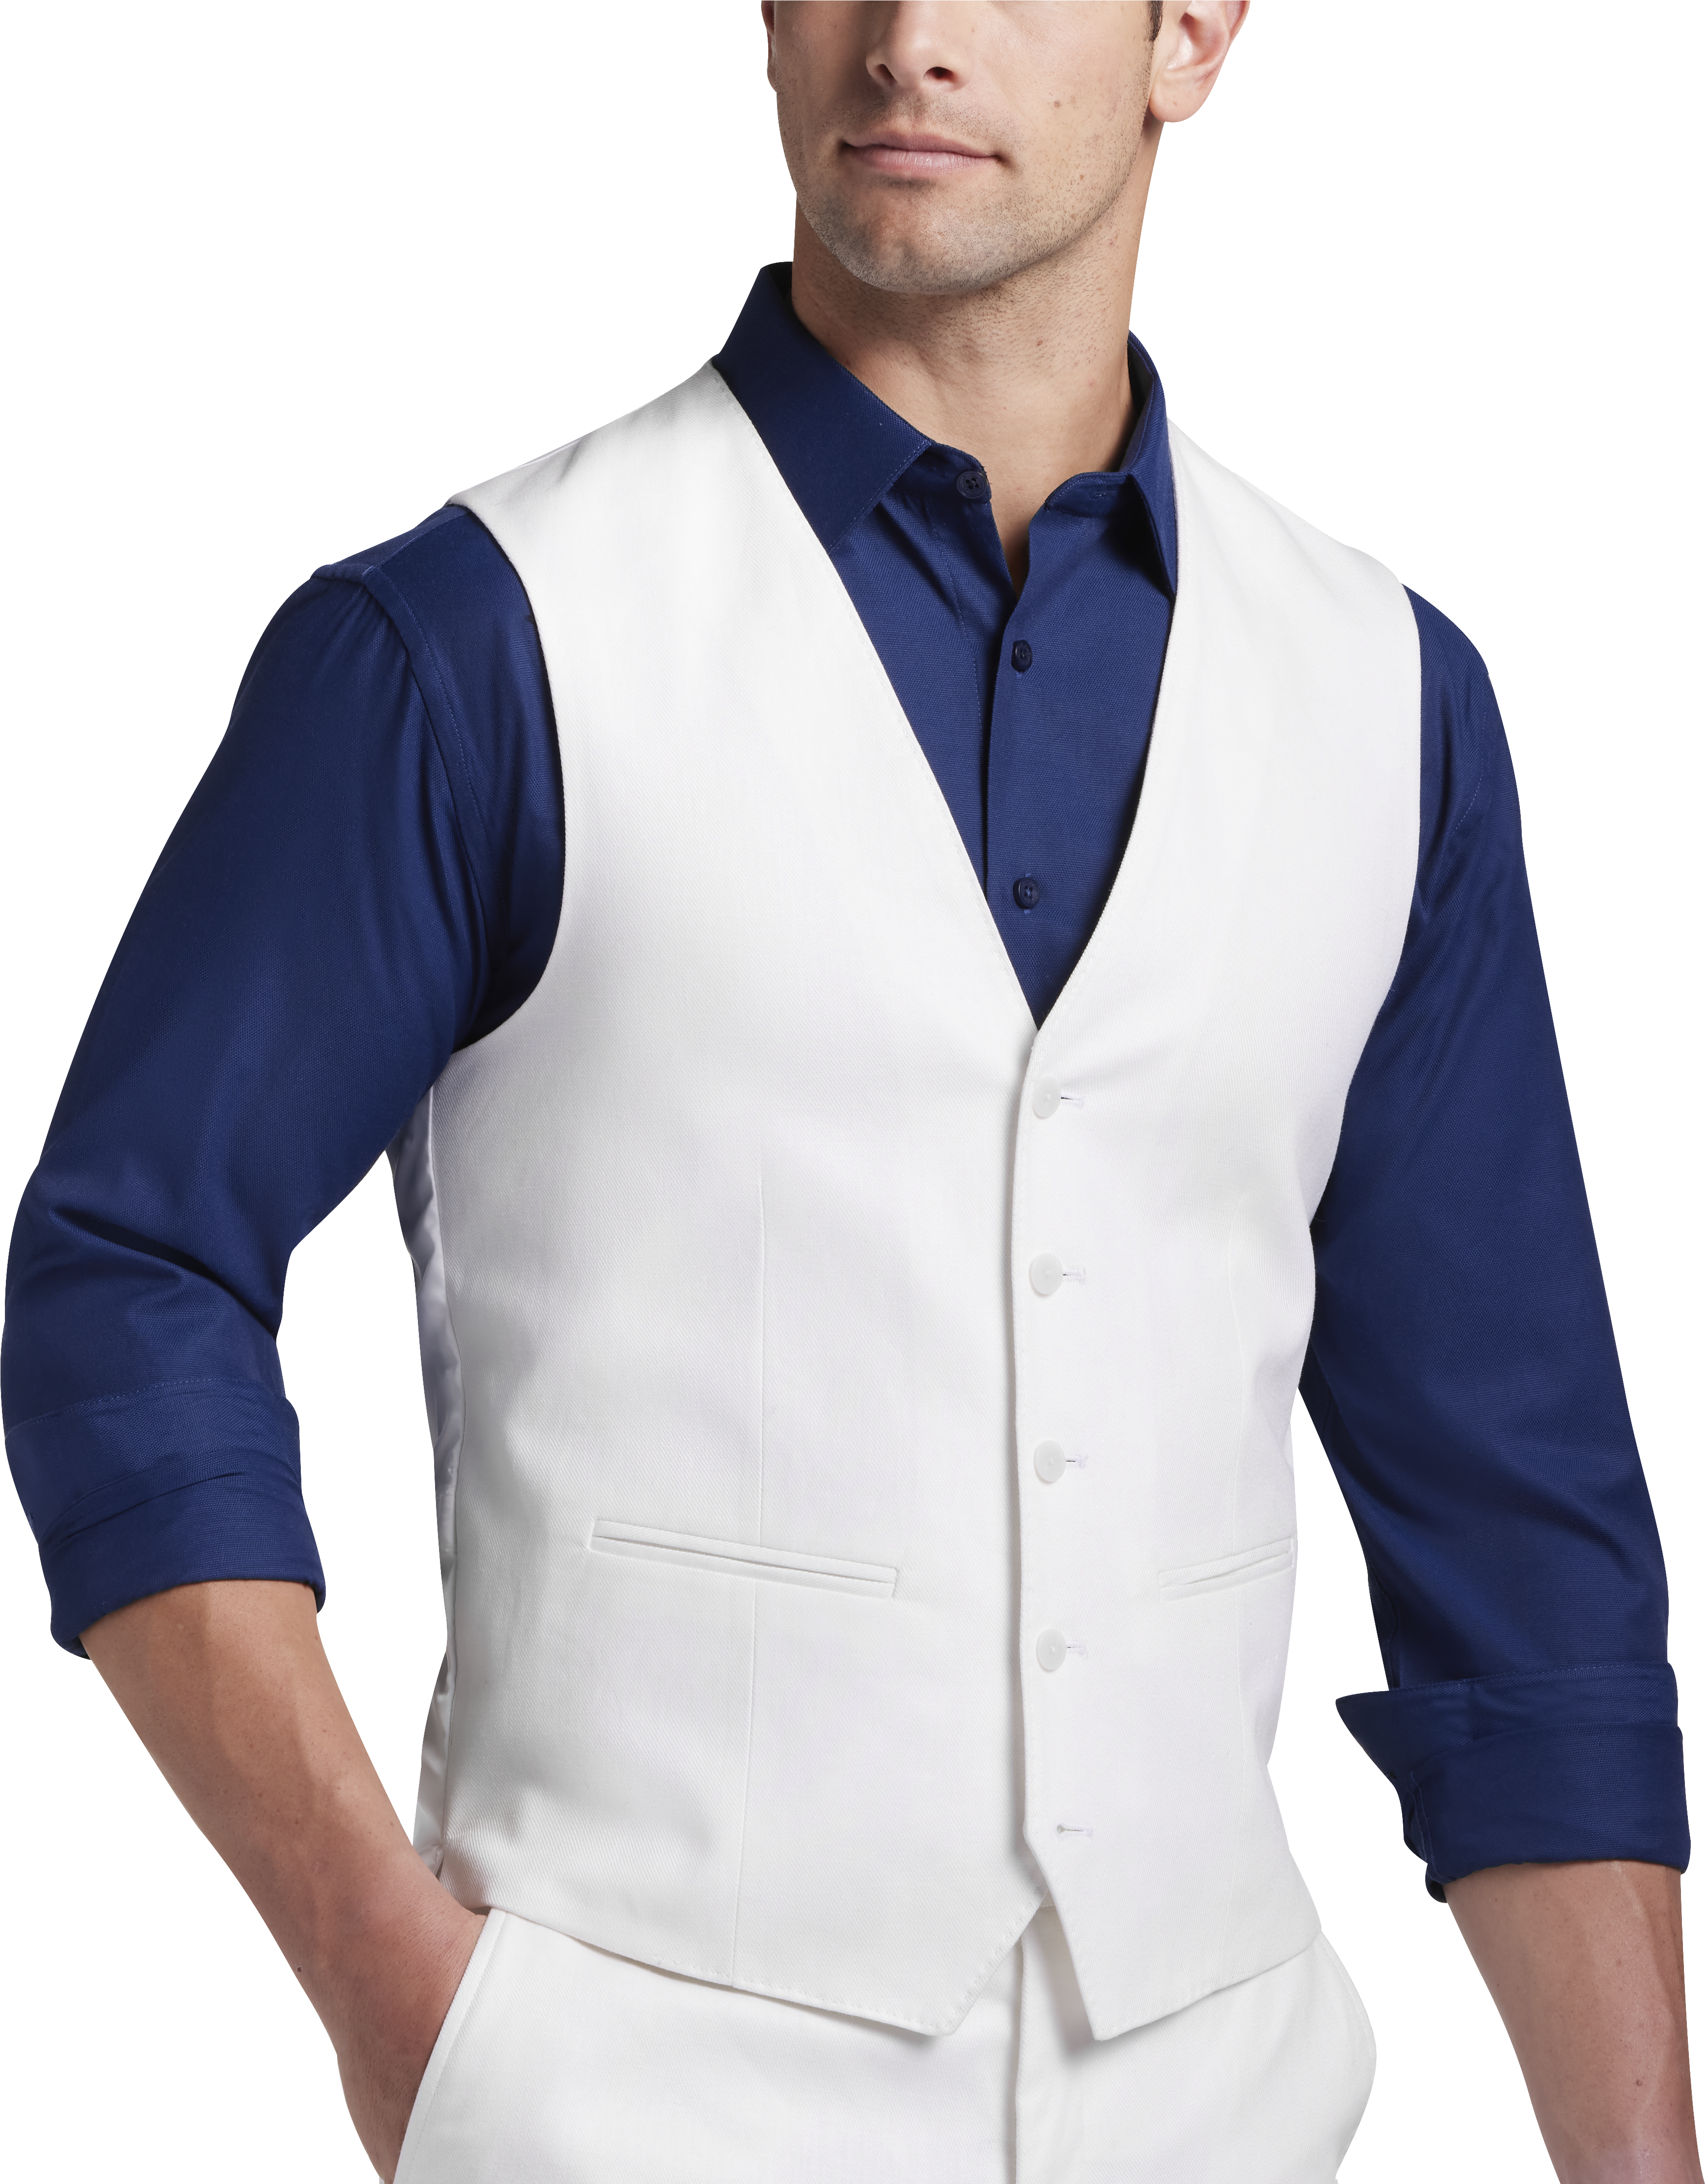 dress shirt and vest